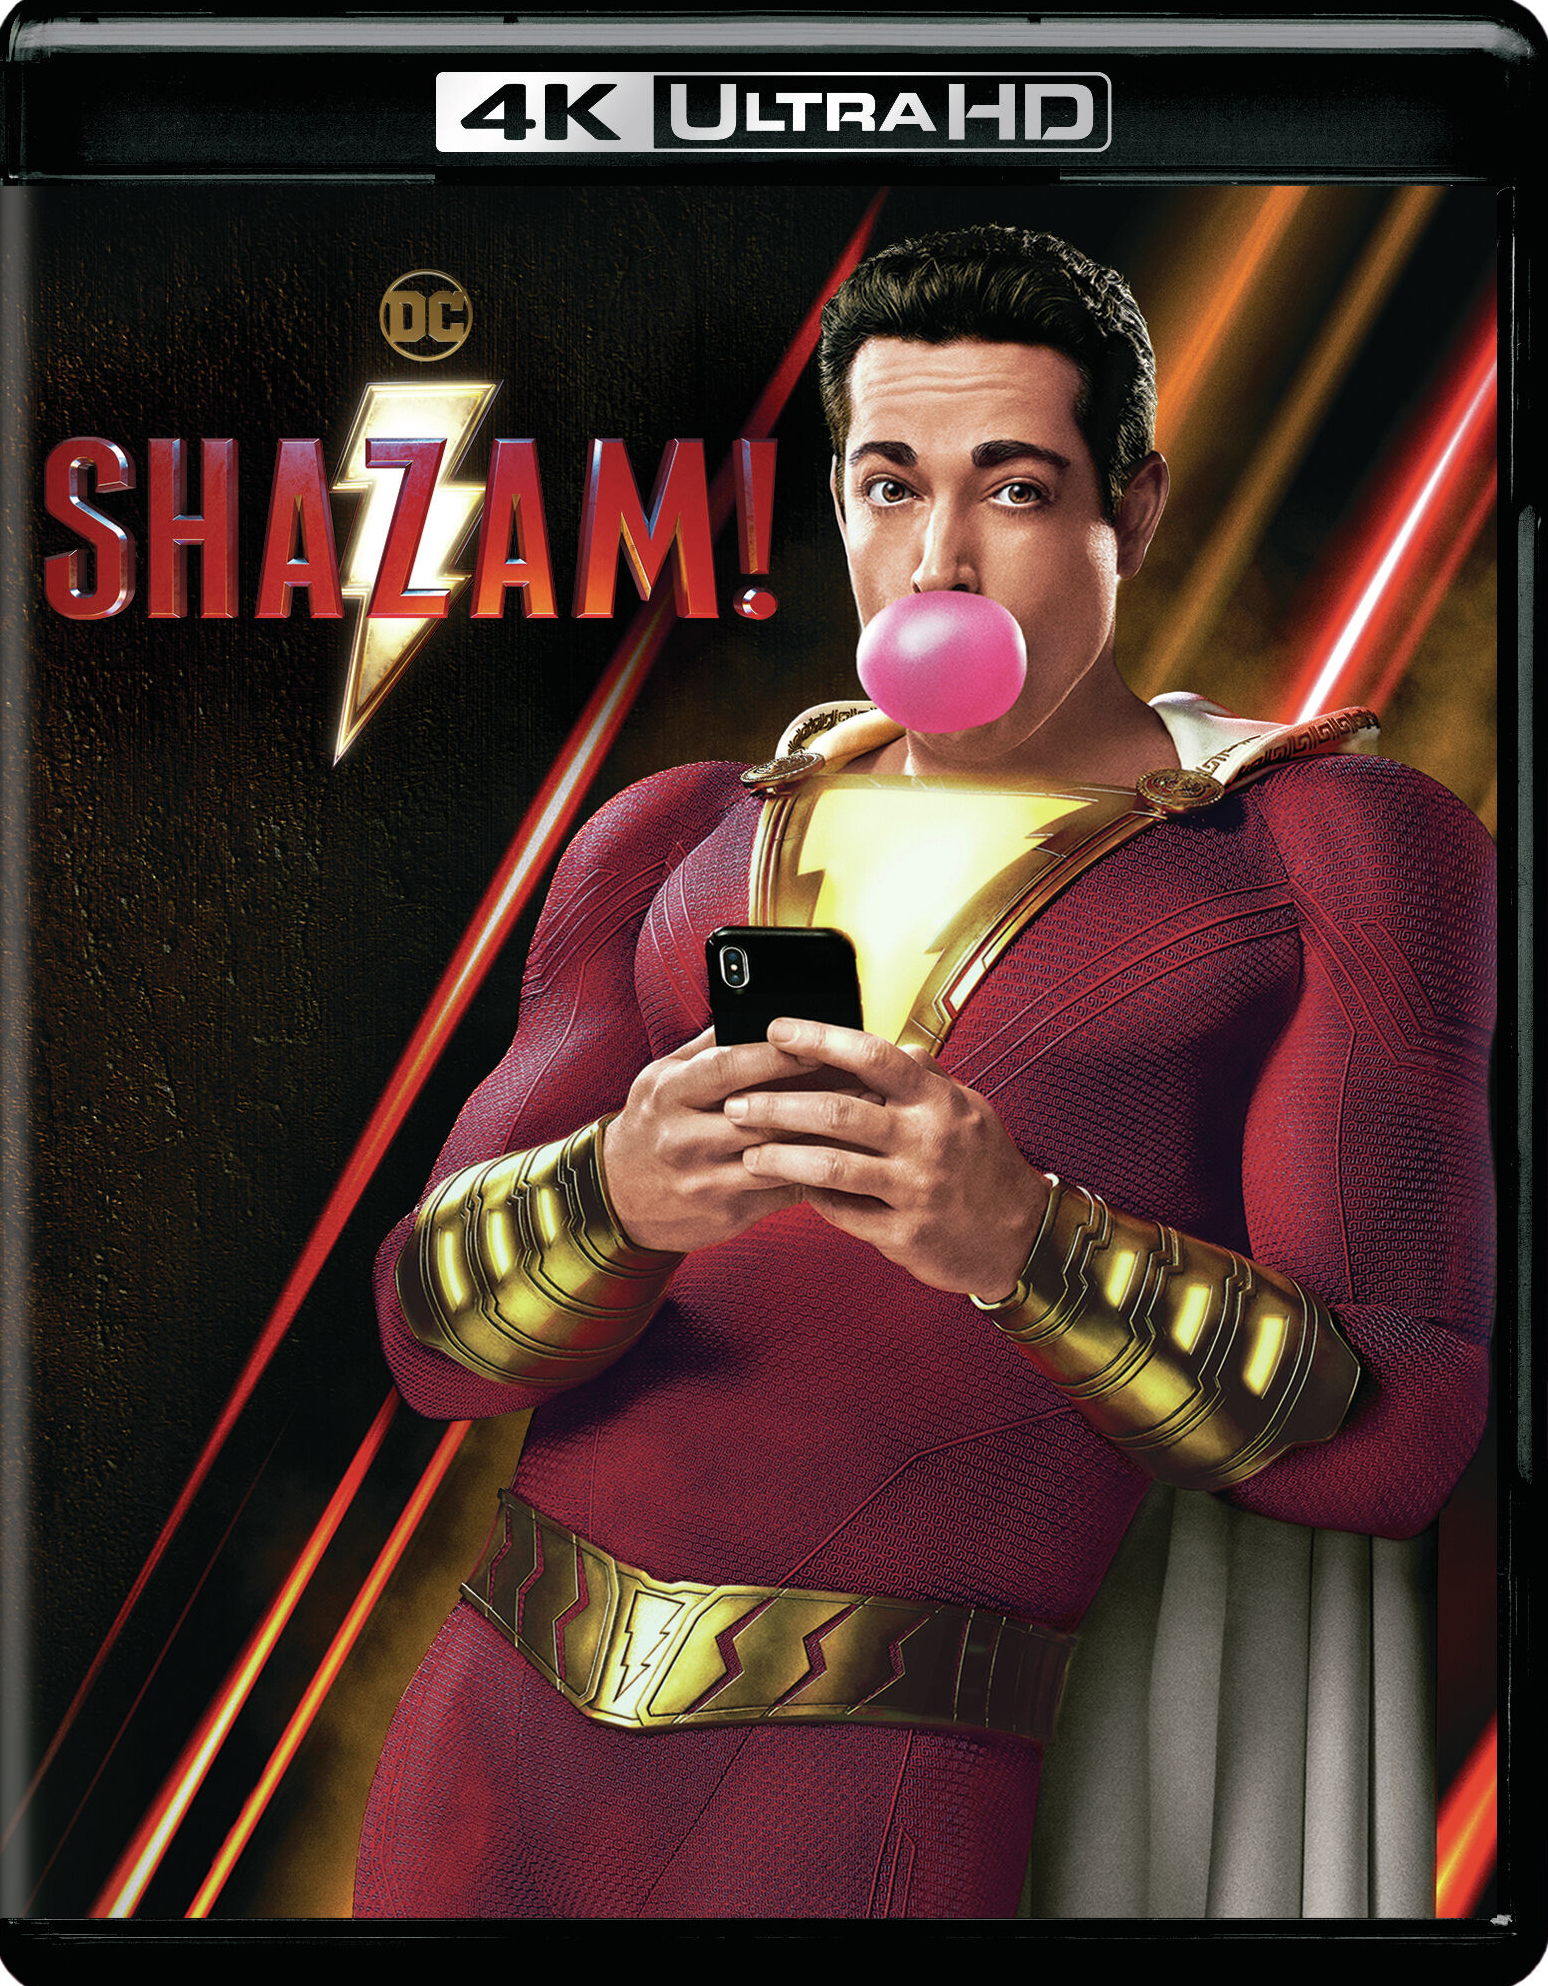 SHAZAM 2 FURY OF THE GODS Shazam Meets Wonder Woman (4K ULTRA HD